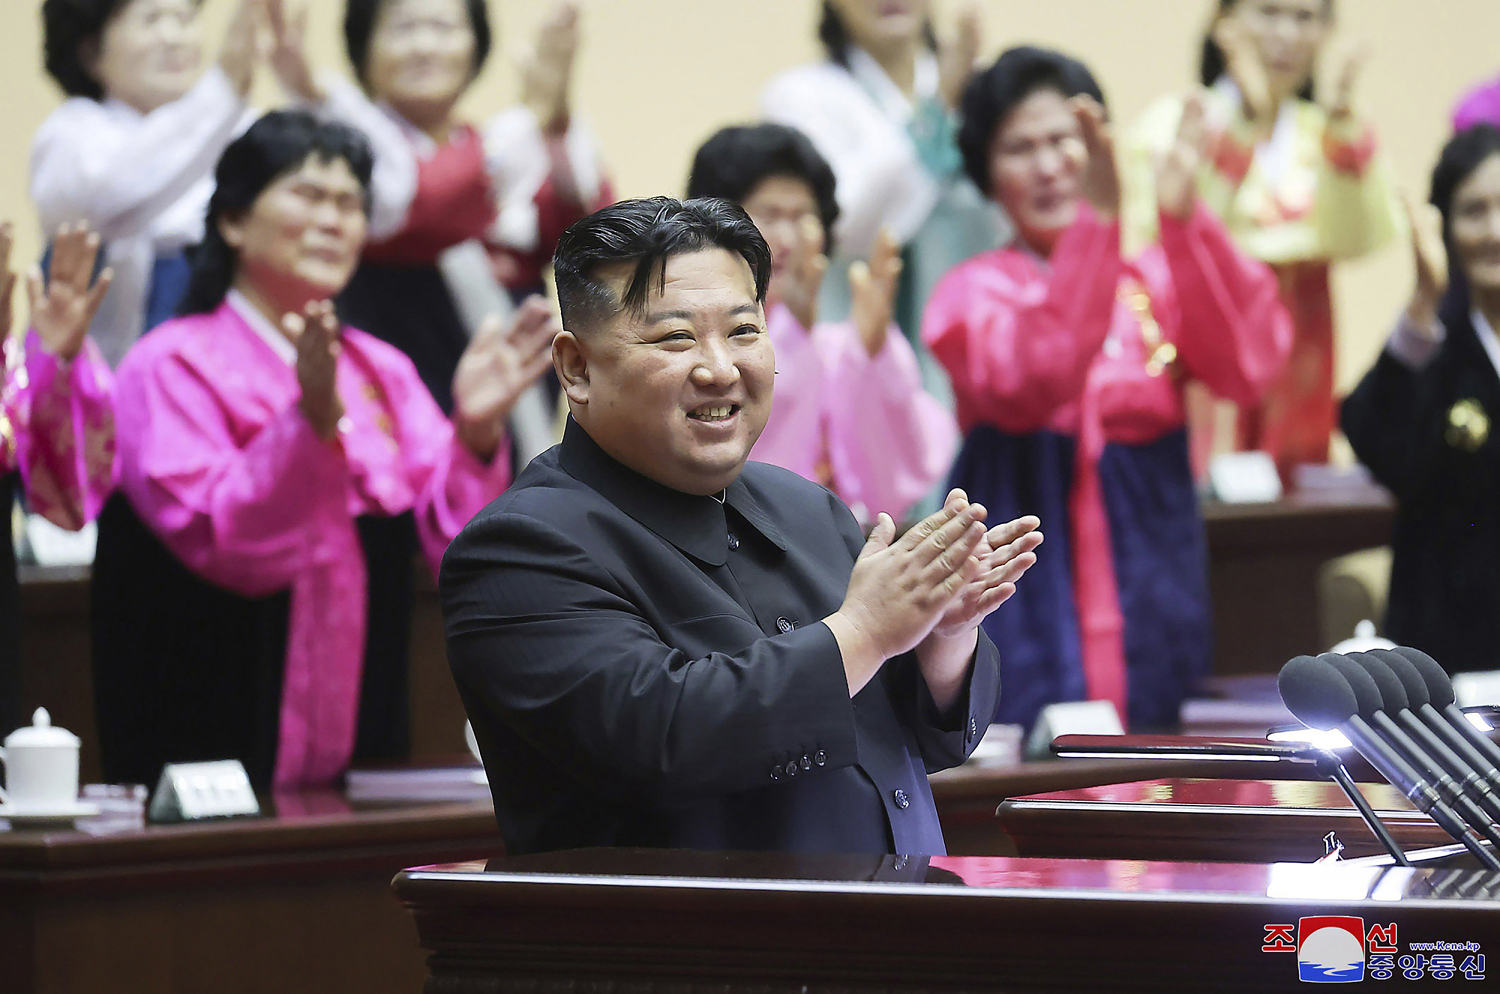 North Korea bolsters leader Kim Jong UN with birthday loyalty oaths